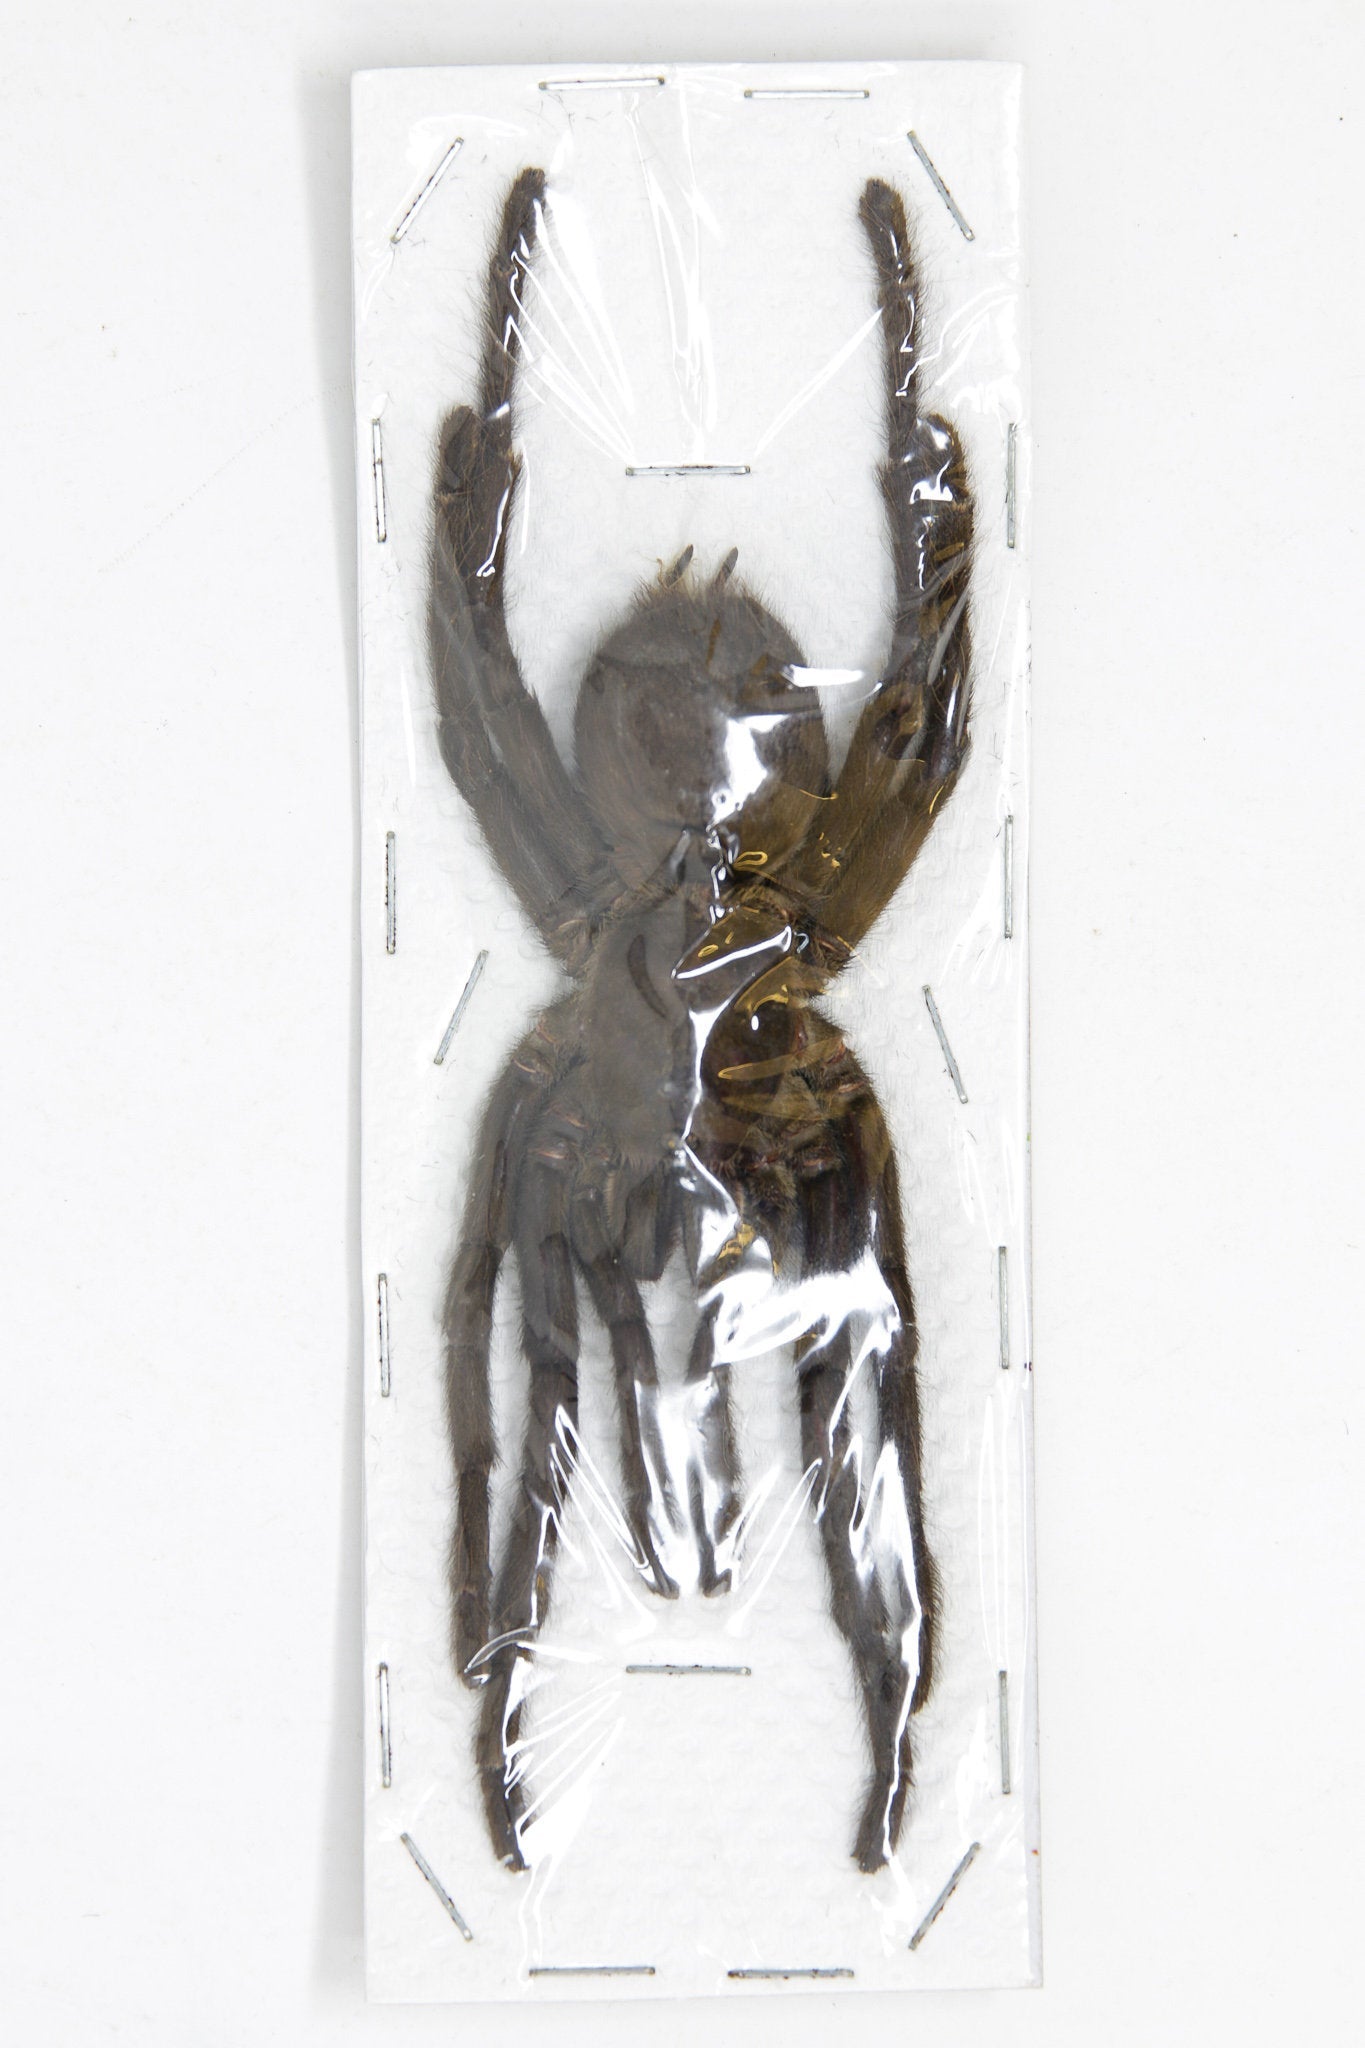 2 x Cyriopagopus minax | Thai Bird-eating Tarantulas +/- 120mm | A1 Unmounted Specimens